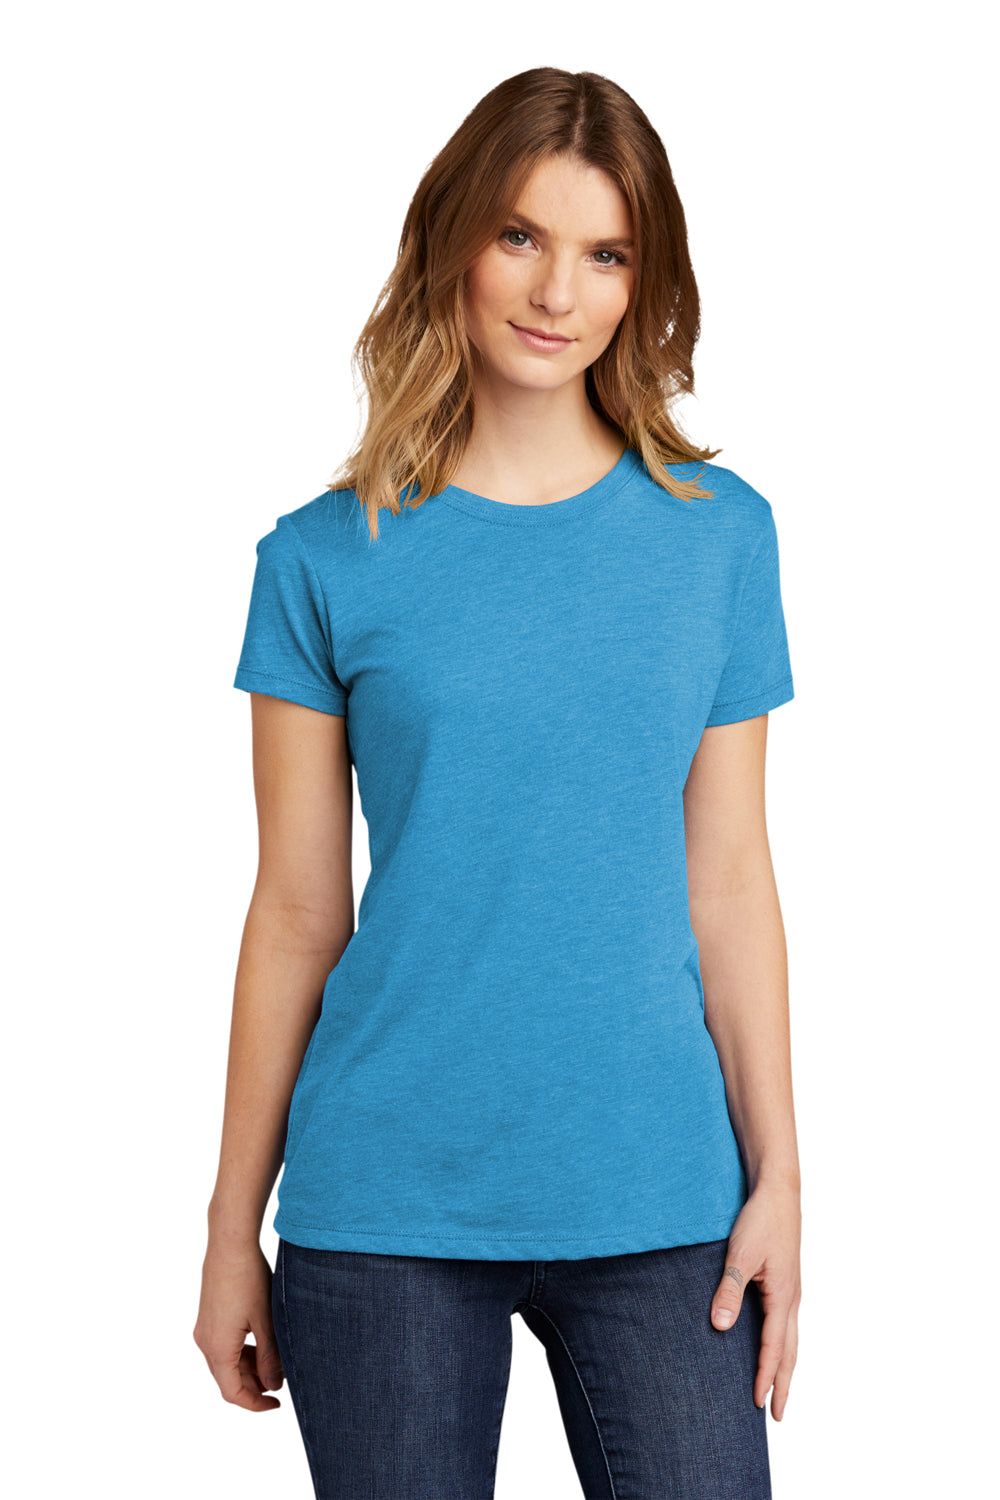 Next Level NL6710/6710 Mens Jersey Short Sleeve Crewneck T-Shirt Vintage Turquoise Blue Front